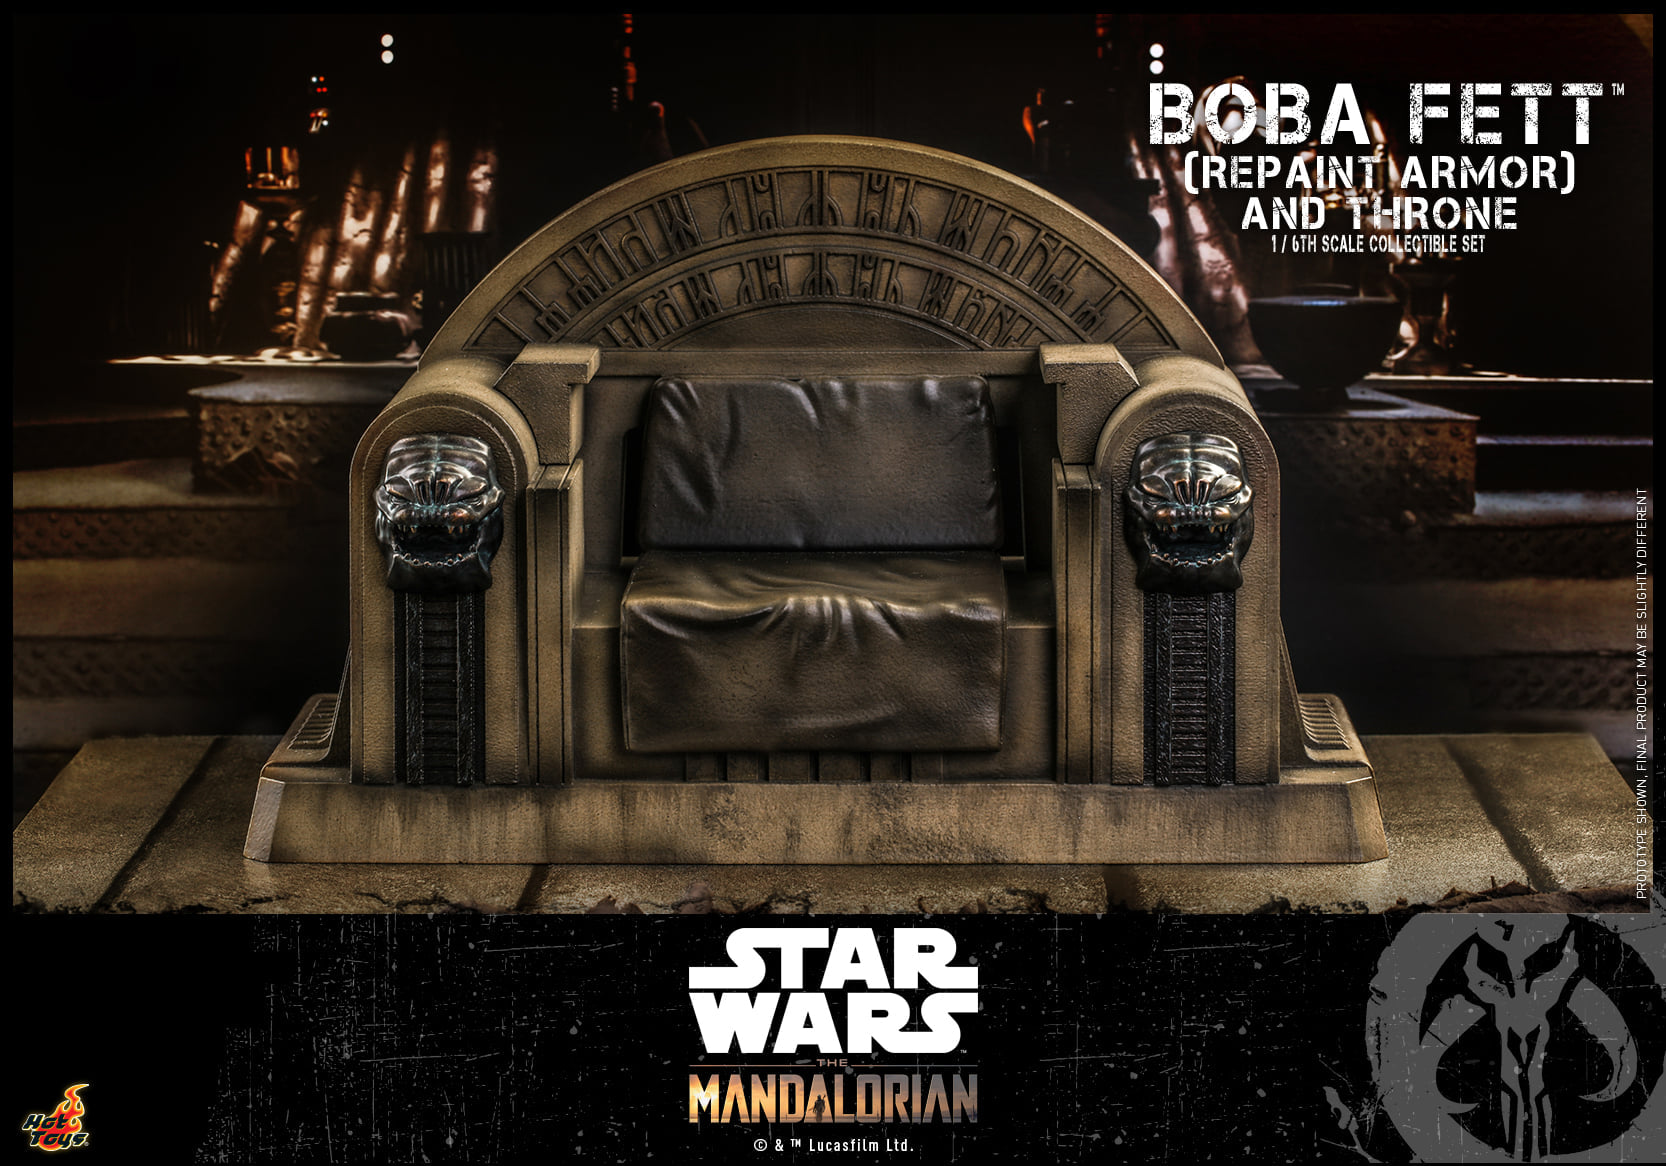 Hot Toys - TMS056 - Star Wars: The Mandalorian - Boba Fett (Repaint Armor) &amp; Throne - Marvelous Toys